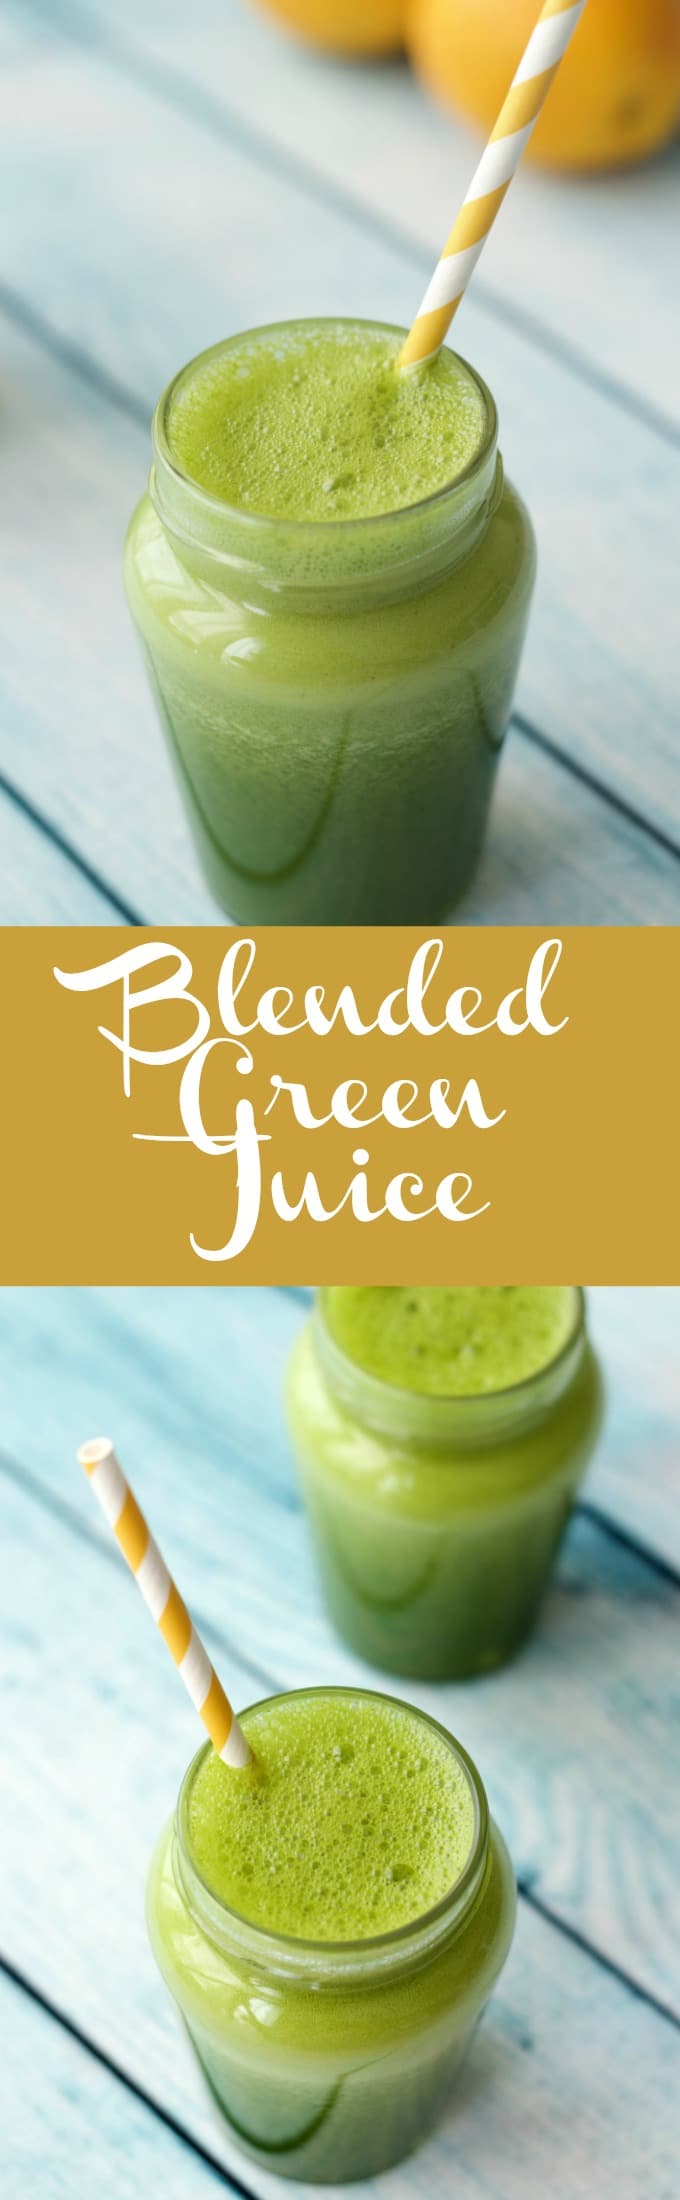 Blended green juice recipe